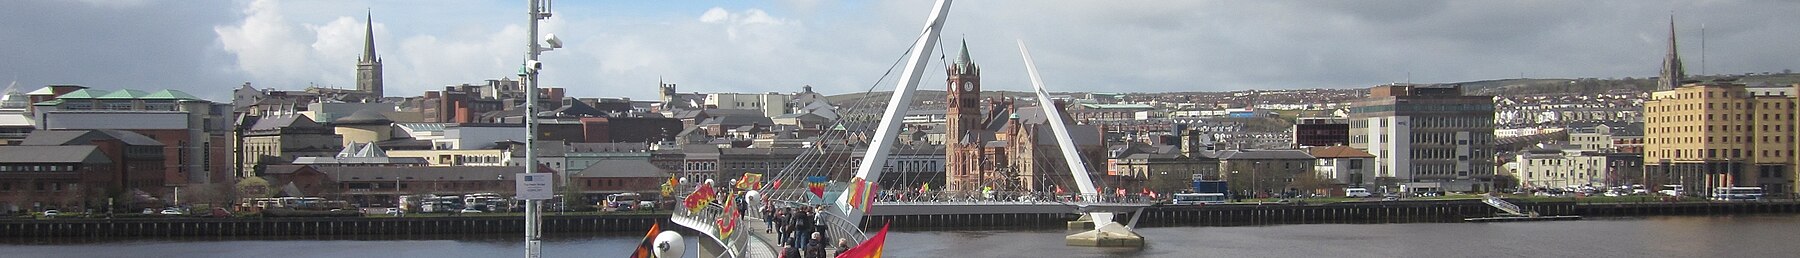 Derry-Londonderry Banner.jpg